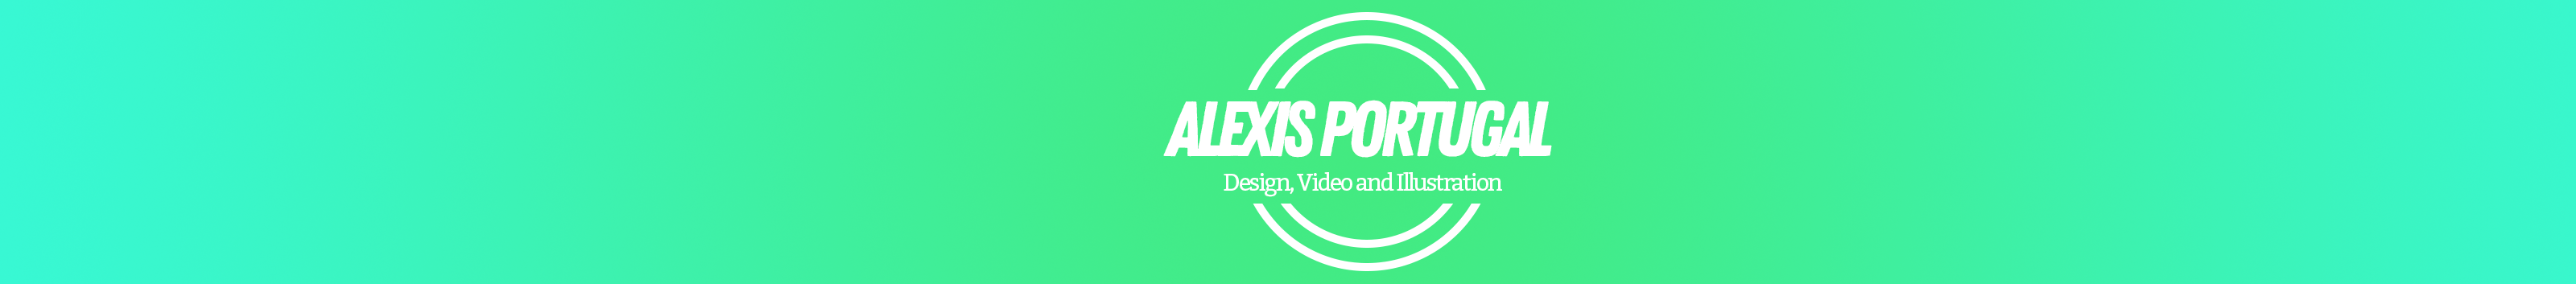 Alexis Portugal's profile banner